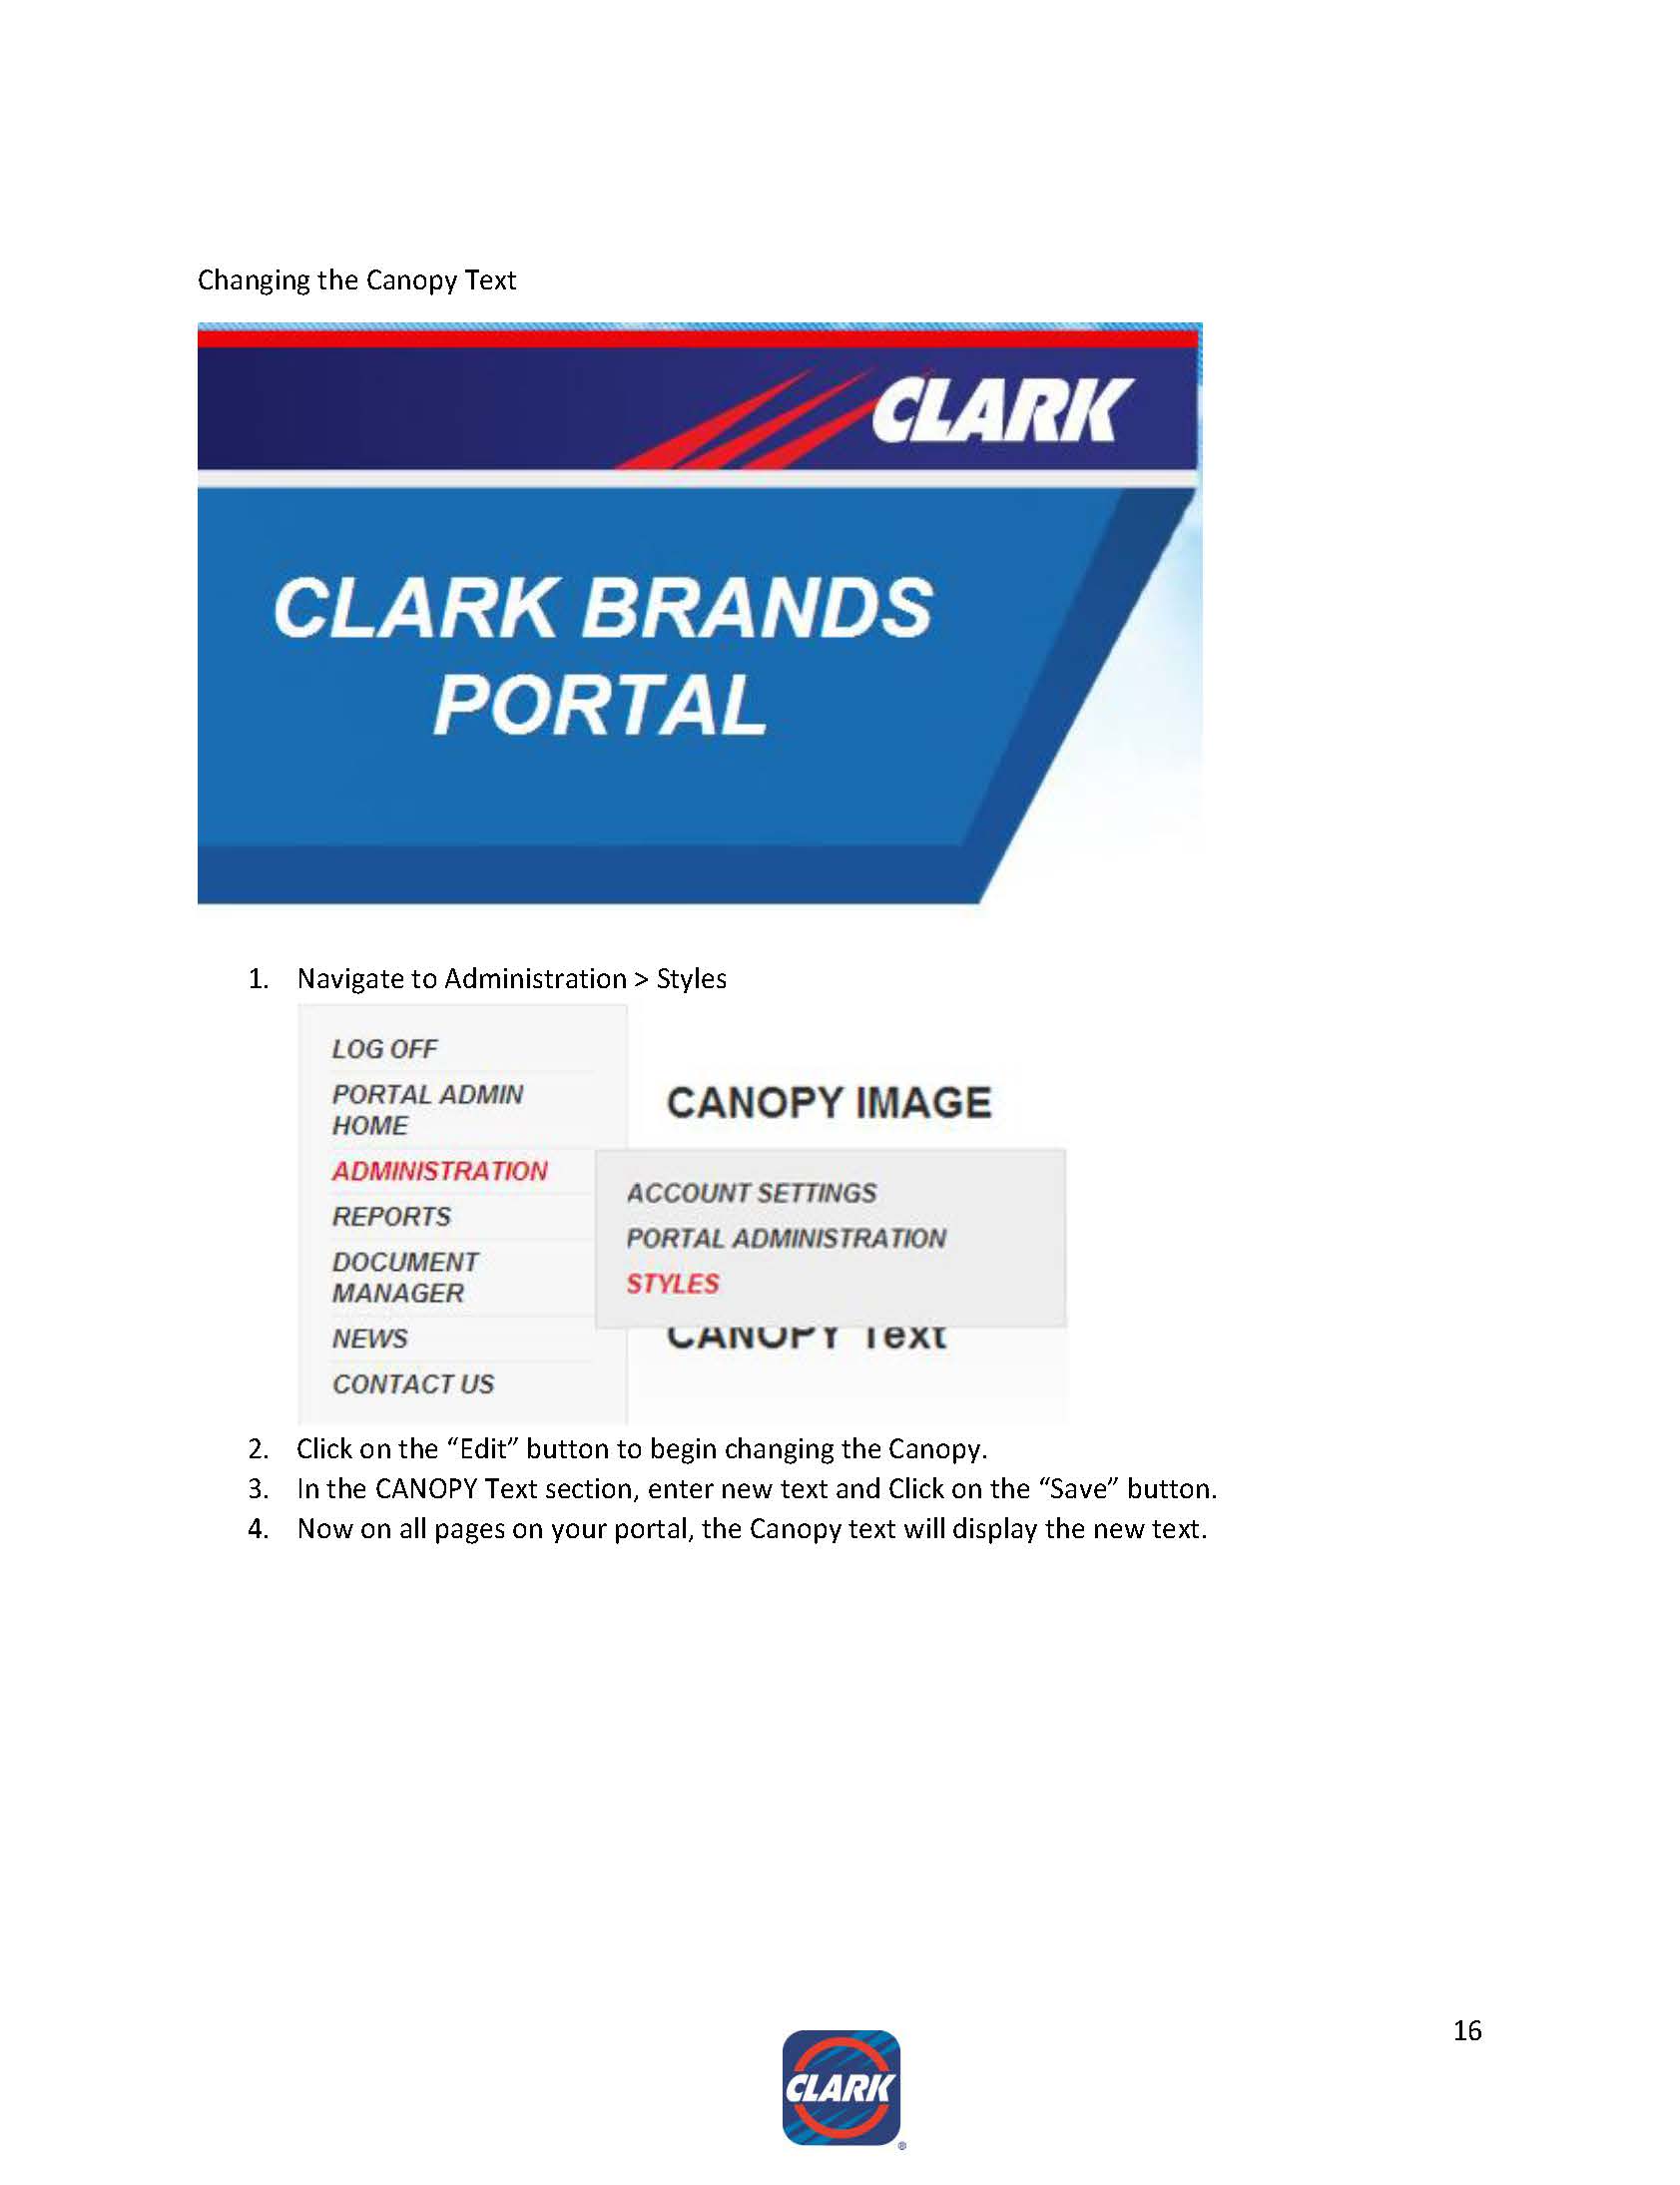 Clark_Brands_Web_Portal_-_Portal_Administration_Page_16.jpg